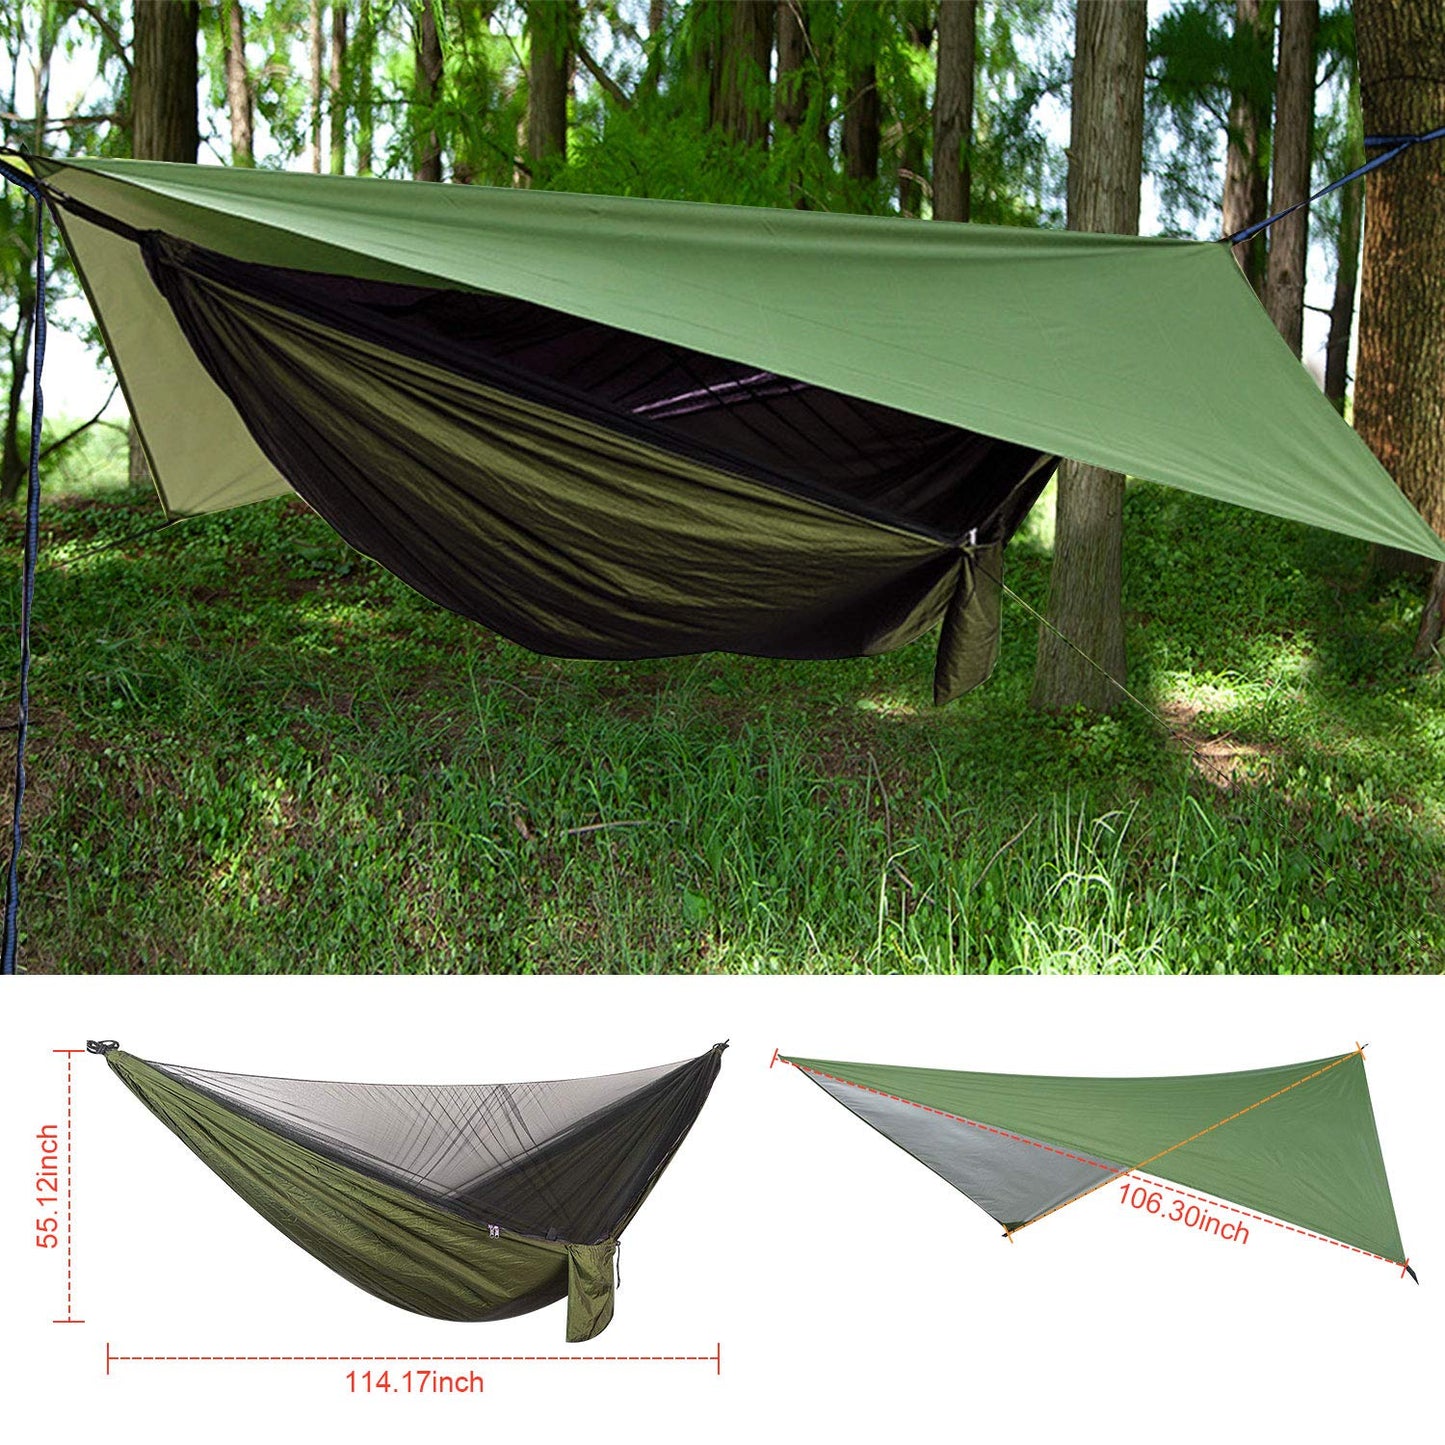 Camping Hammock with Mosquito Net - FIRINER